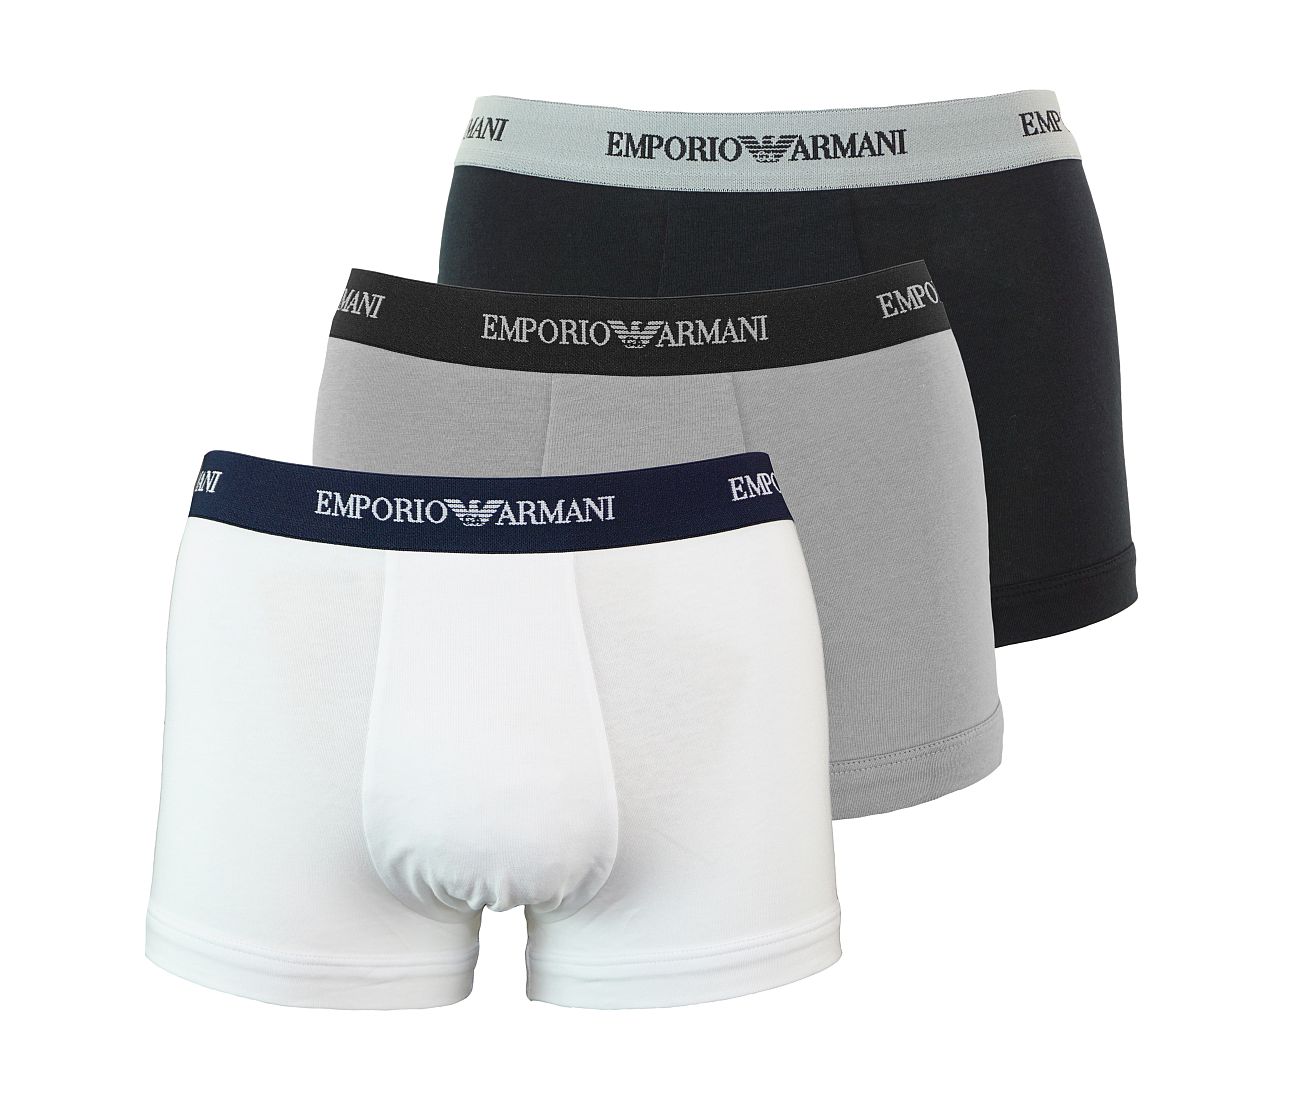 Emporio Armani 3er Pack Shorts Trunks Unterhosen BIANCO/NERO/GRIGIO 111357 CC717 02910 WF17-EAU1